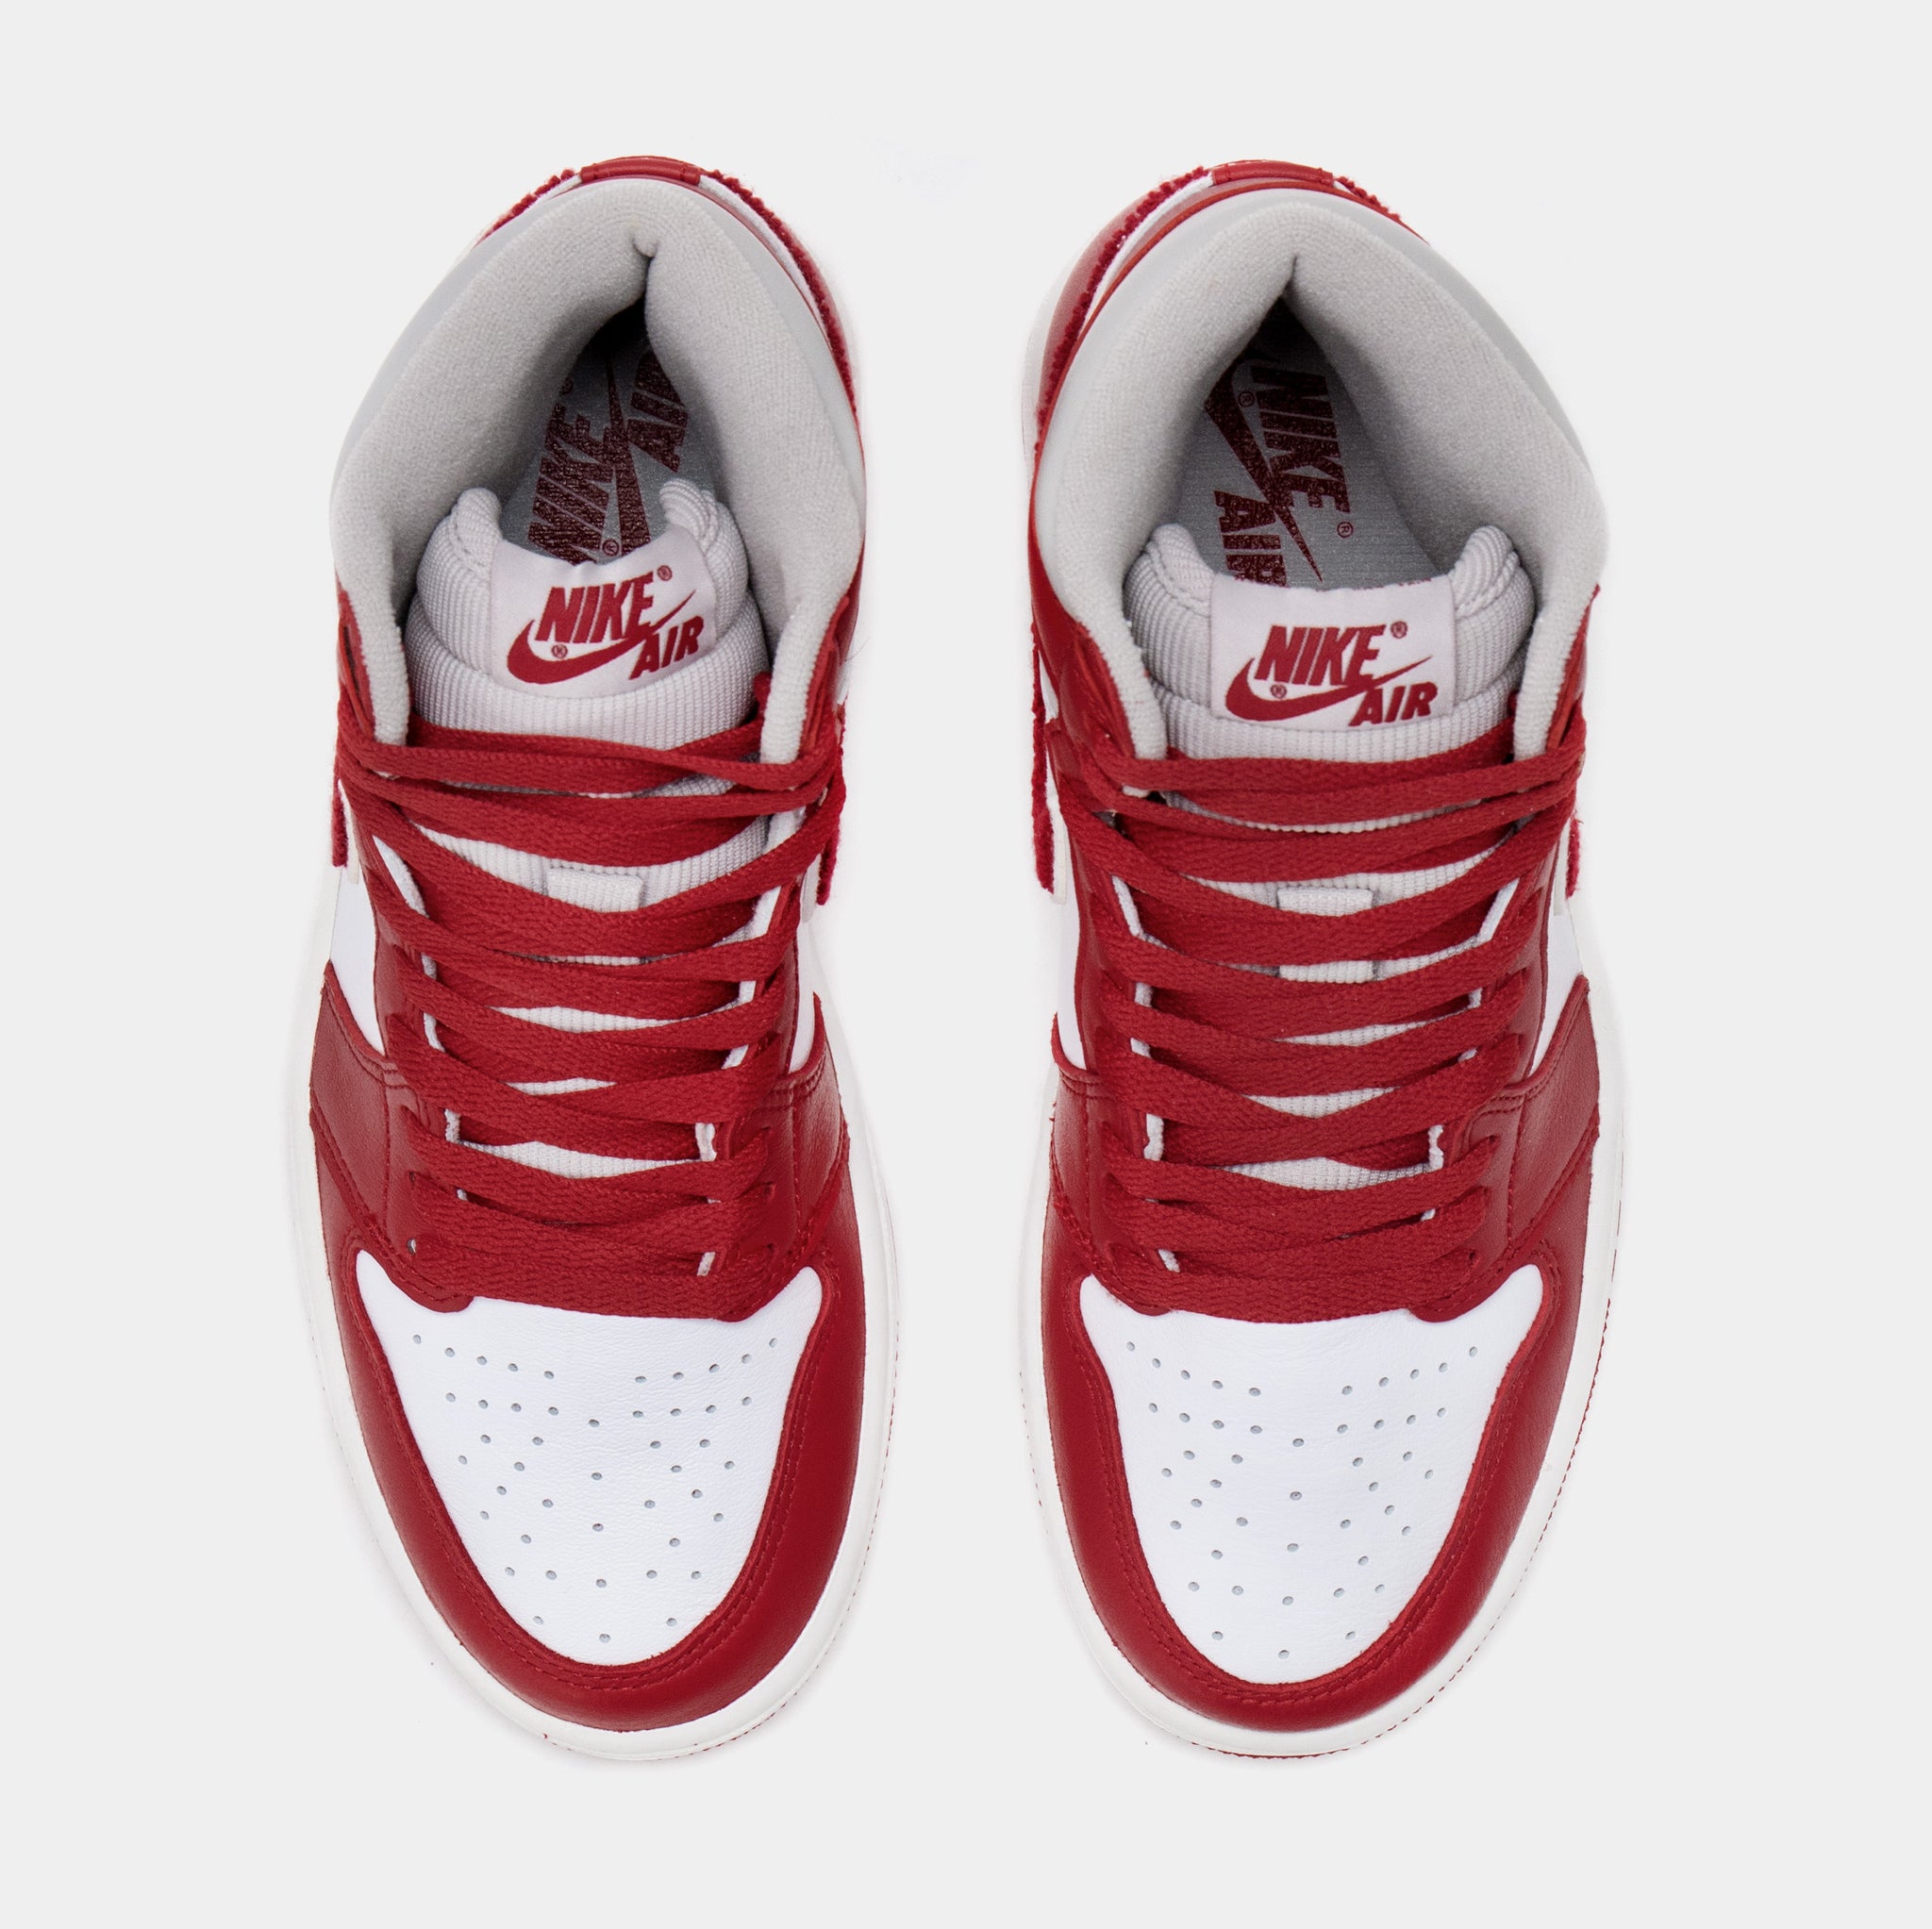 Jordan Air Jordan 1 High OG Newstalgia Womens Lifestyle Shoes Red